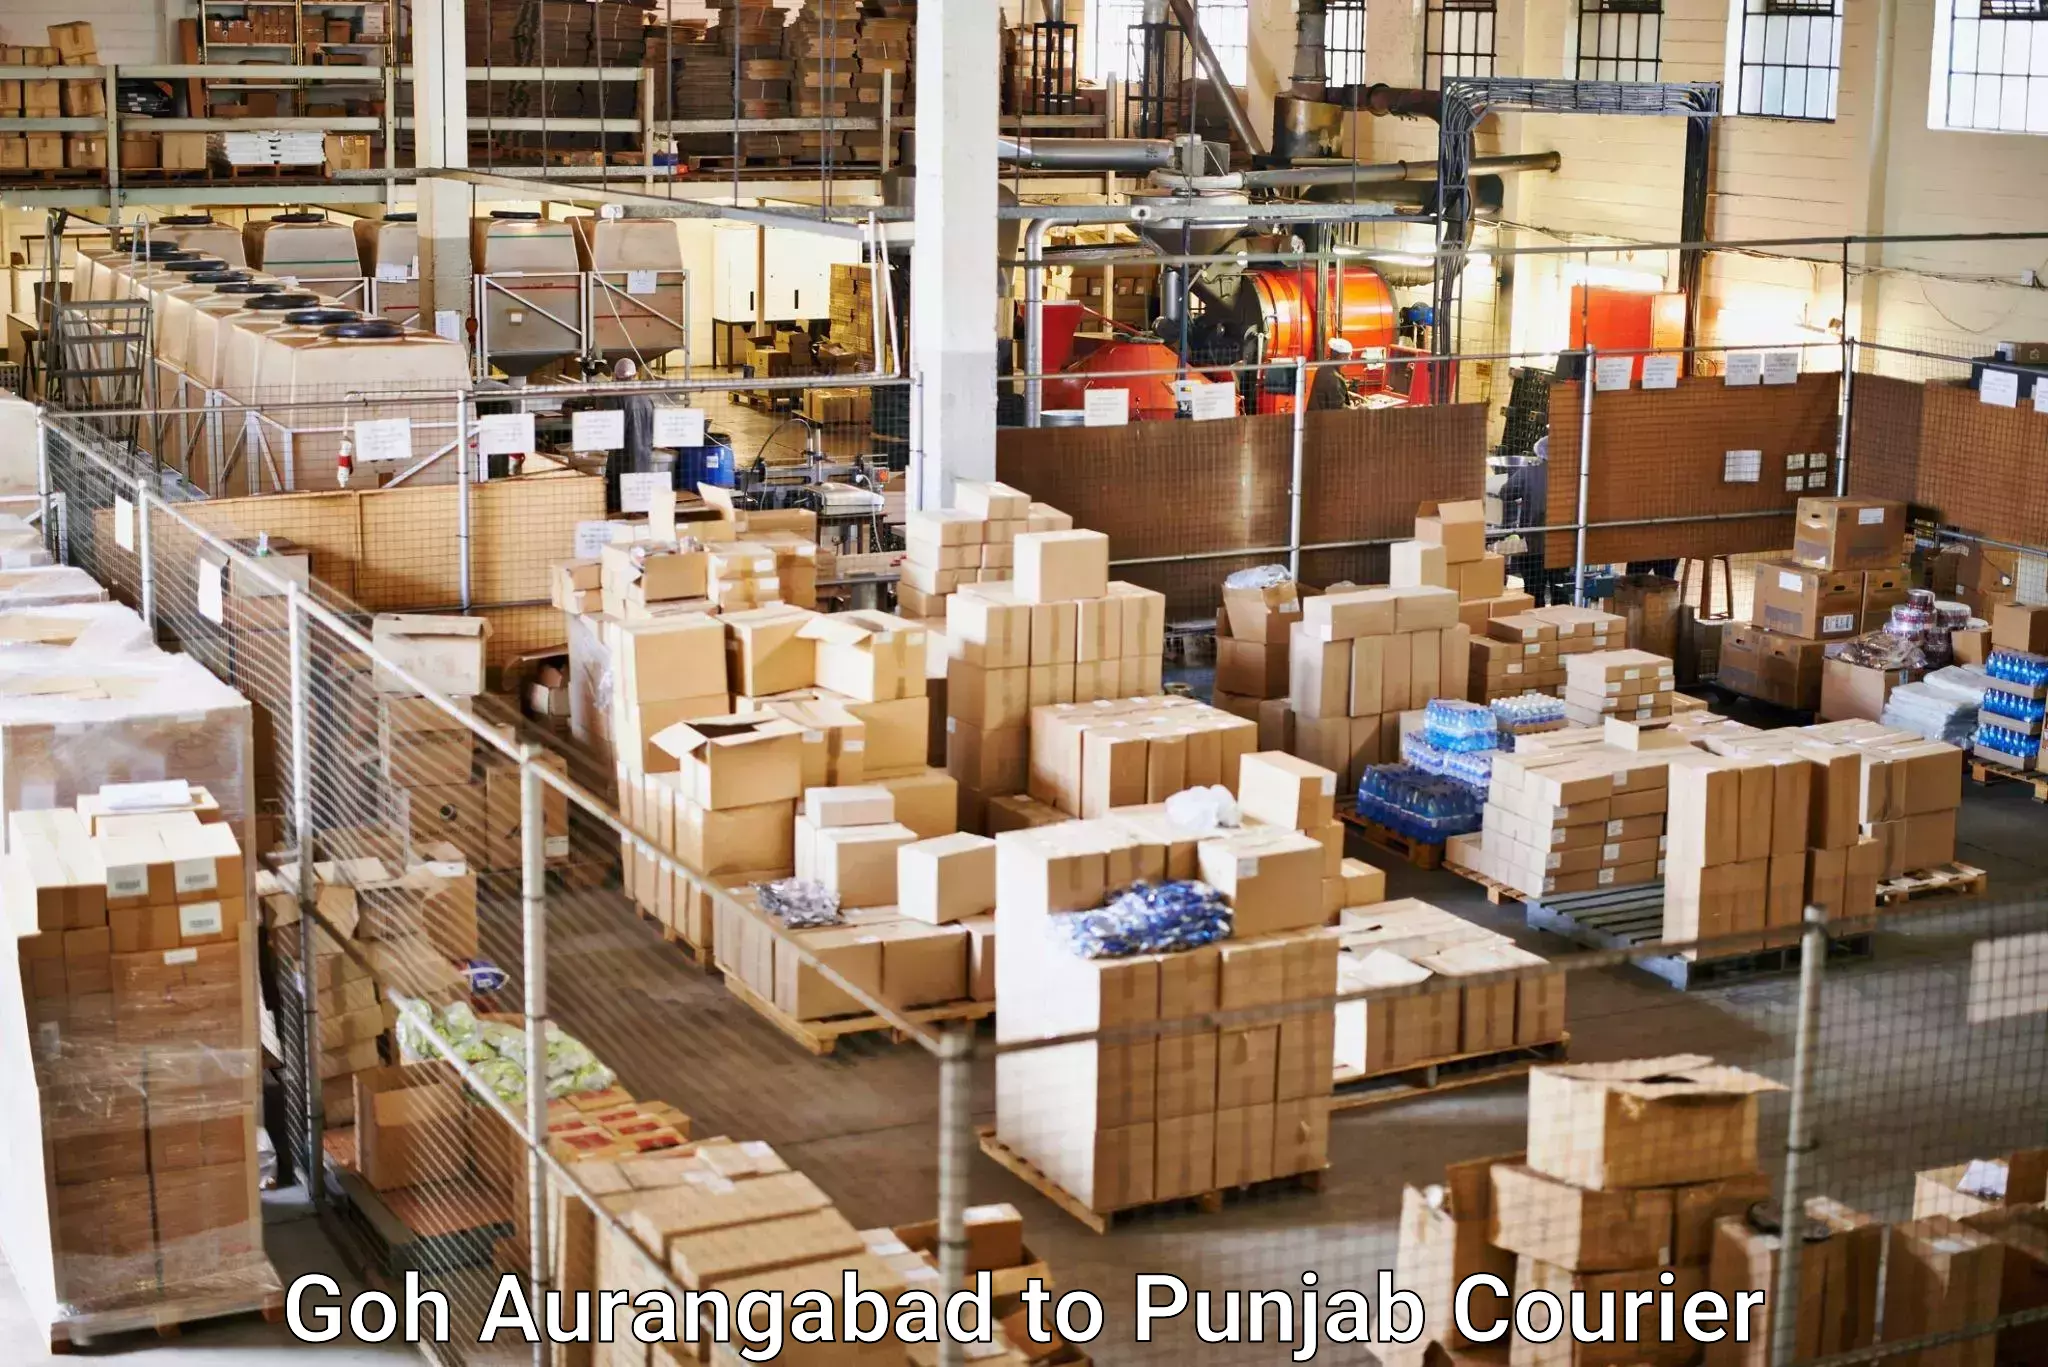 Cargo delivery service Goh Aurangabad to Ajnala